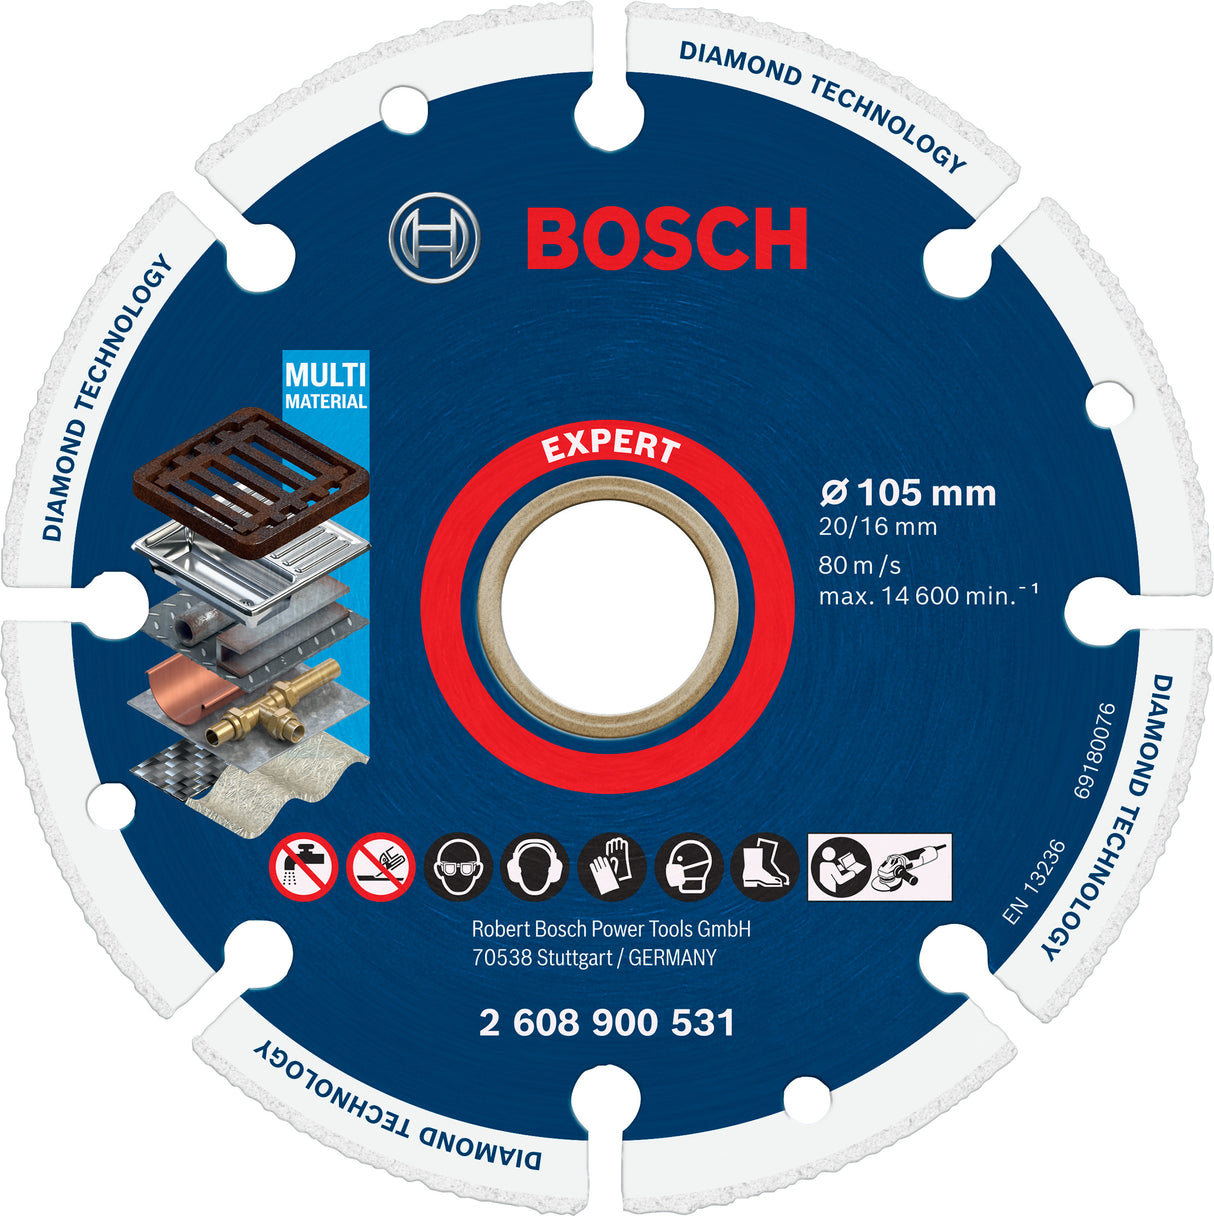 Bosch Professional Diamond Metal Cutting Disc - 105 x 20/16 mm